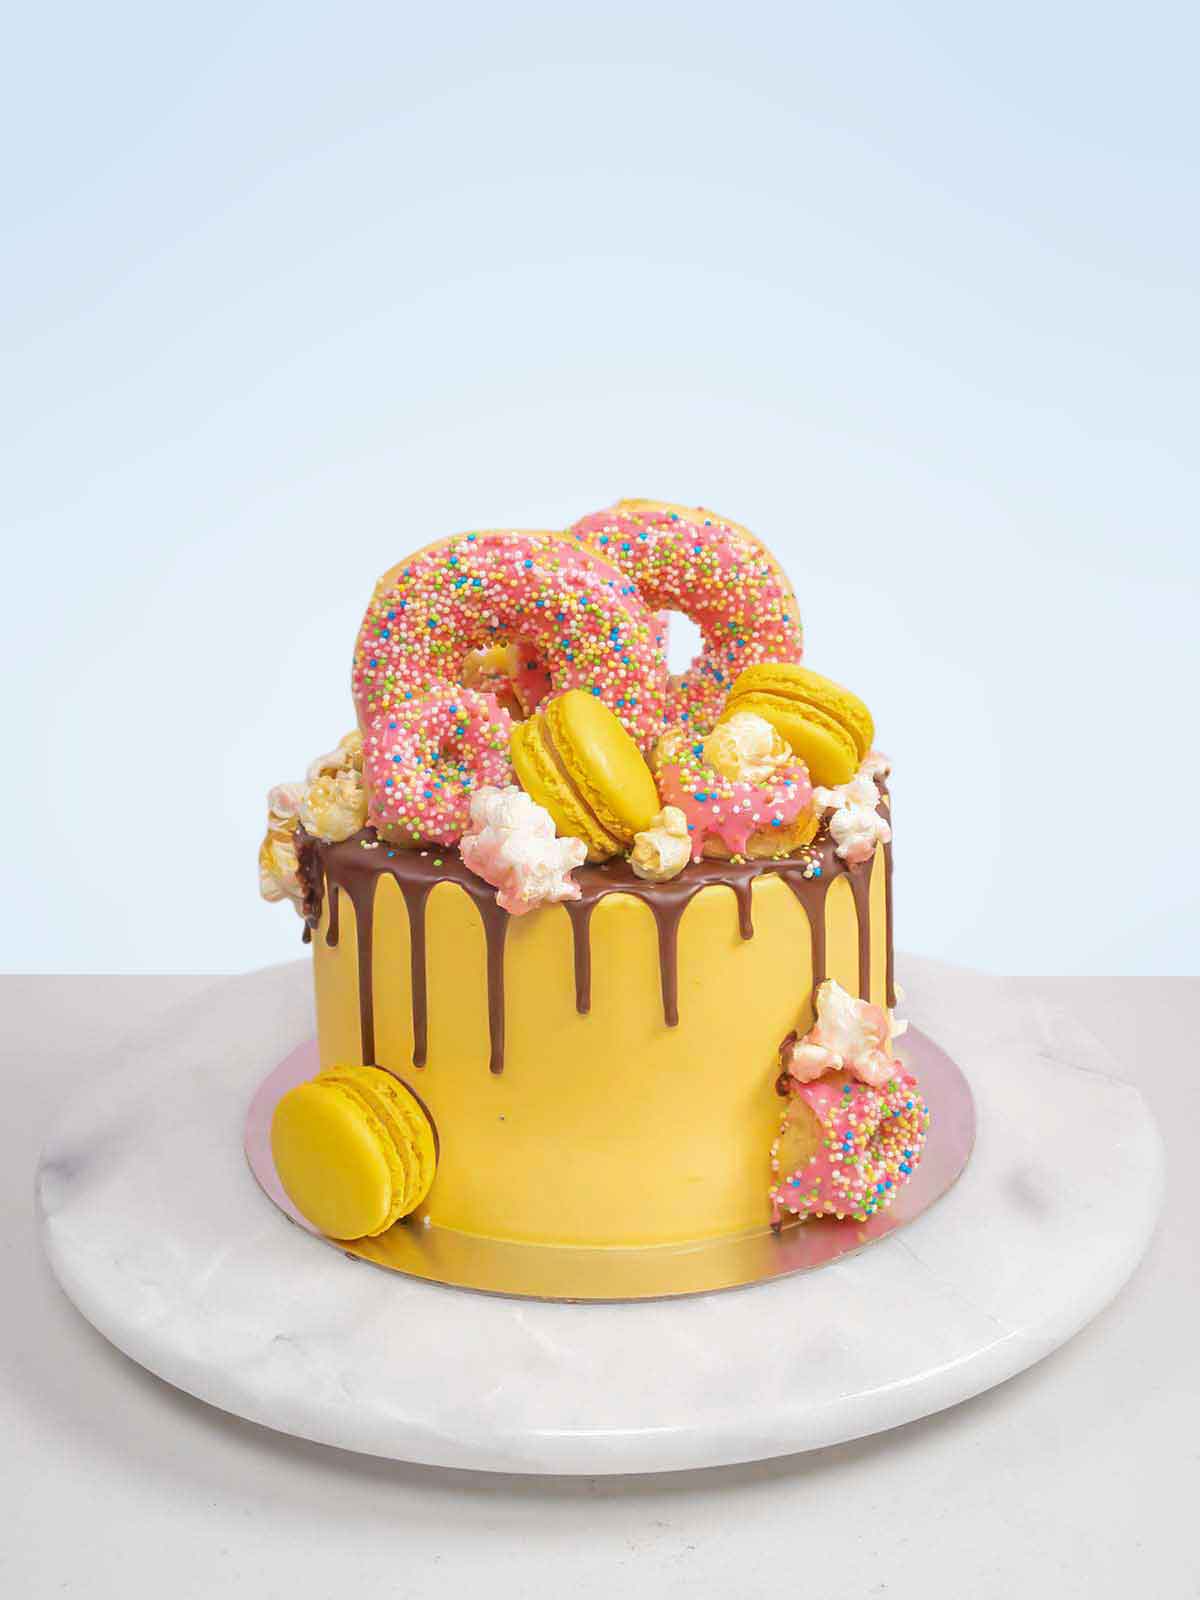 Emoji Tiered Cake - Classy Girl Cupcakes